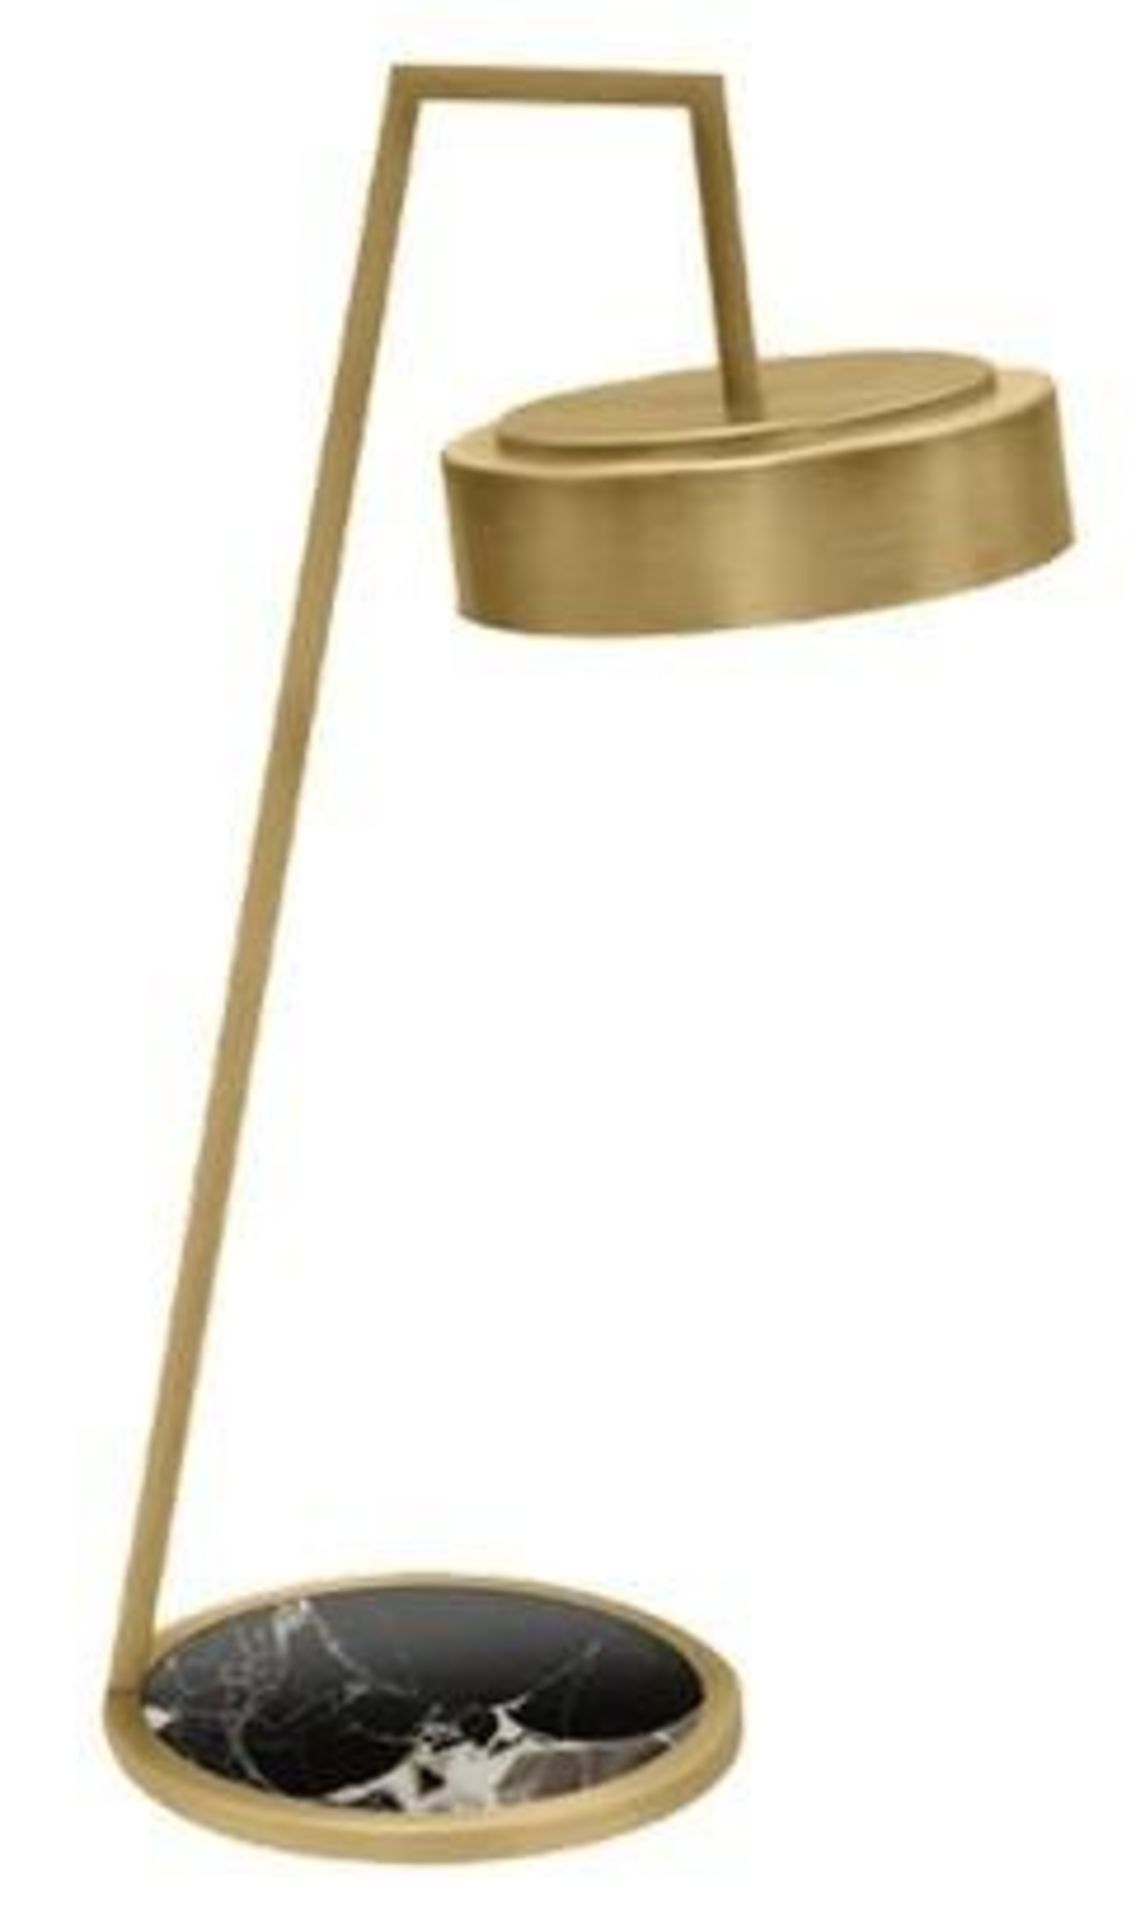 1 x FRATO 'Somerset' Designer Brass Table Lamp (15Lp0060) - Original Price £349.00